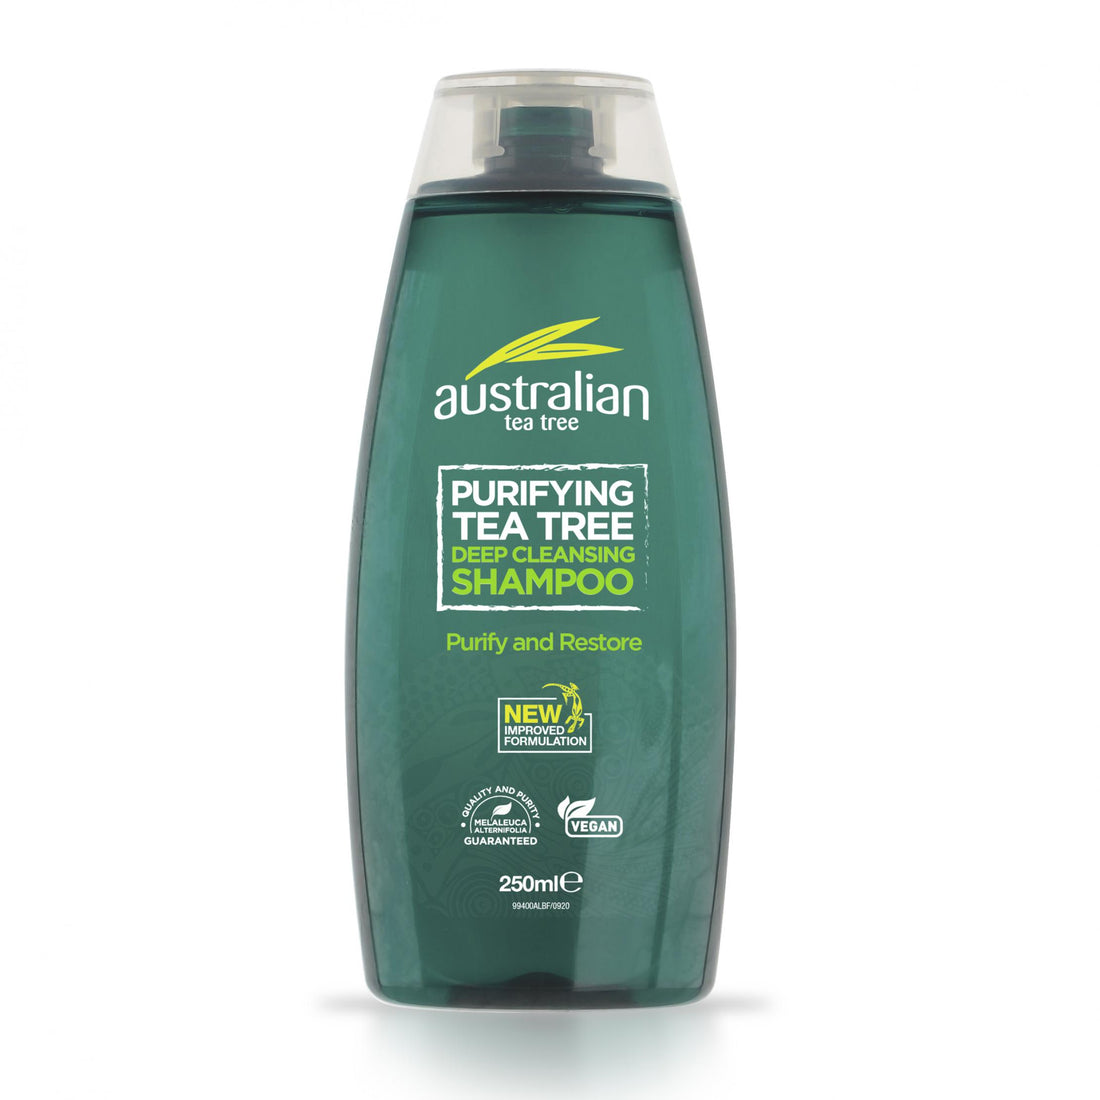 Australian Tea Tree Purifying Tea Tree Deep Cleansing Shampoo 250ml